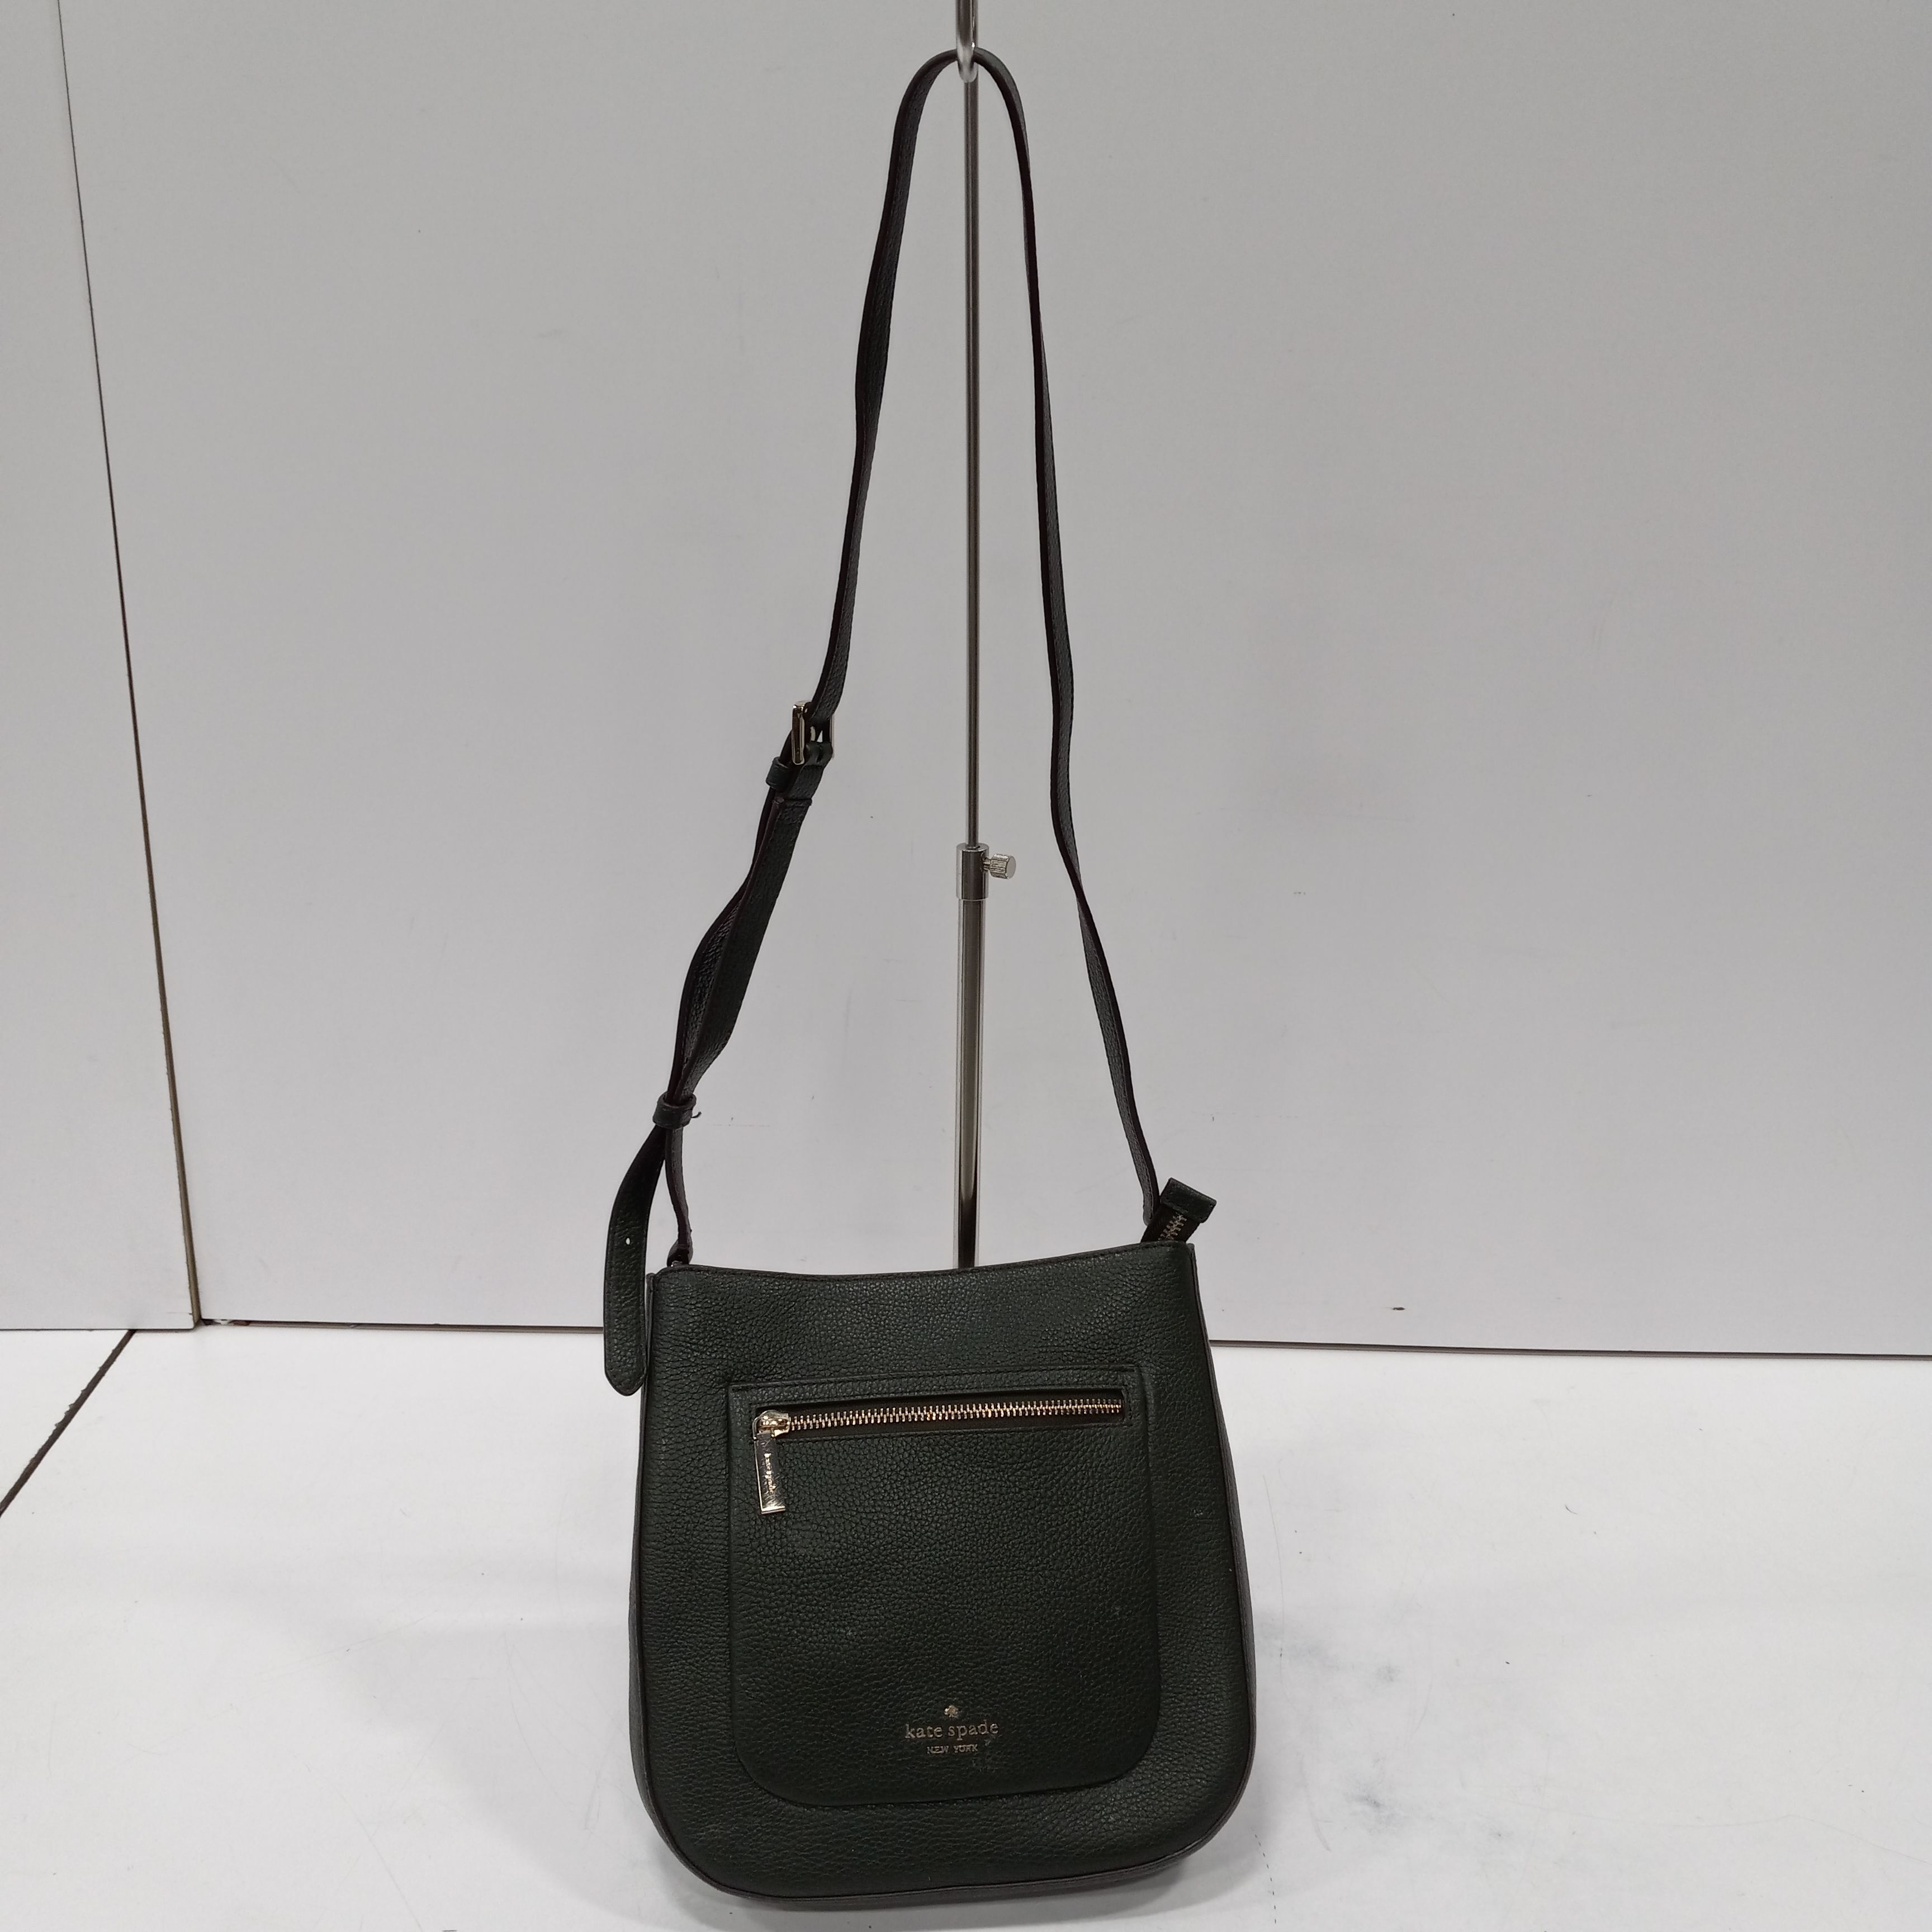 Kate Spade New York Small Flap Crossbody Bag (Dark Peacock): Handbags:  Amazon.com